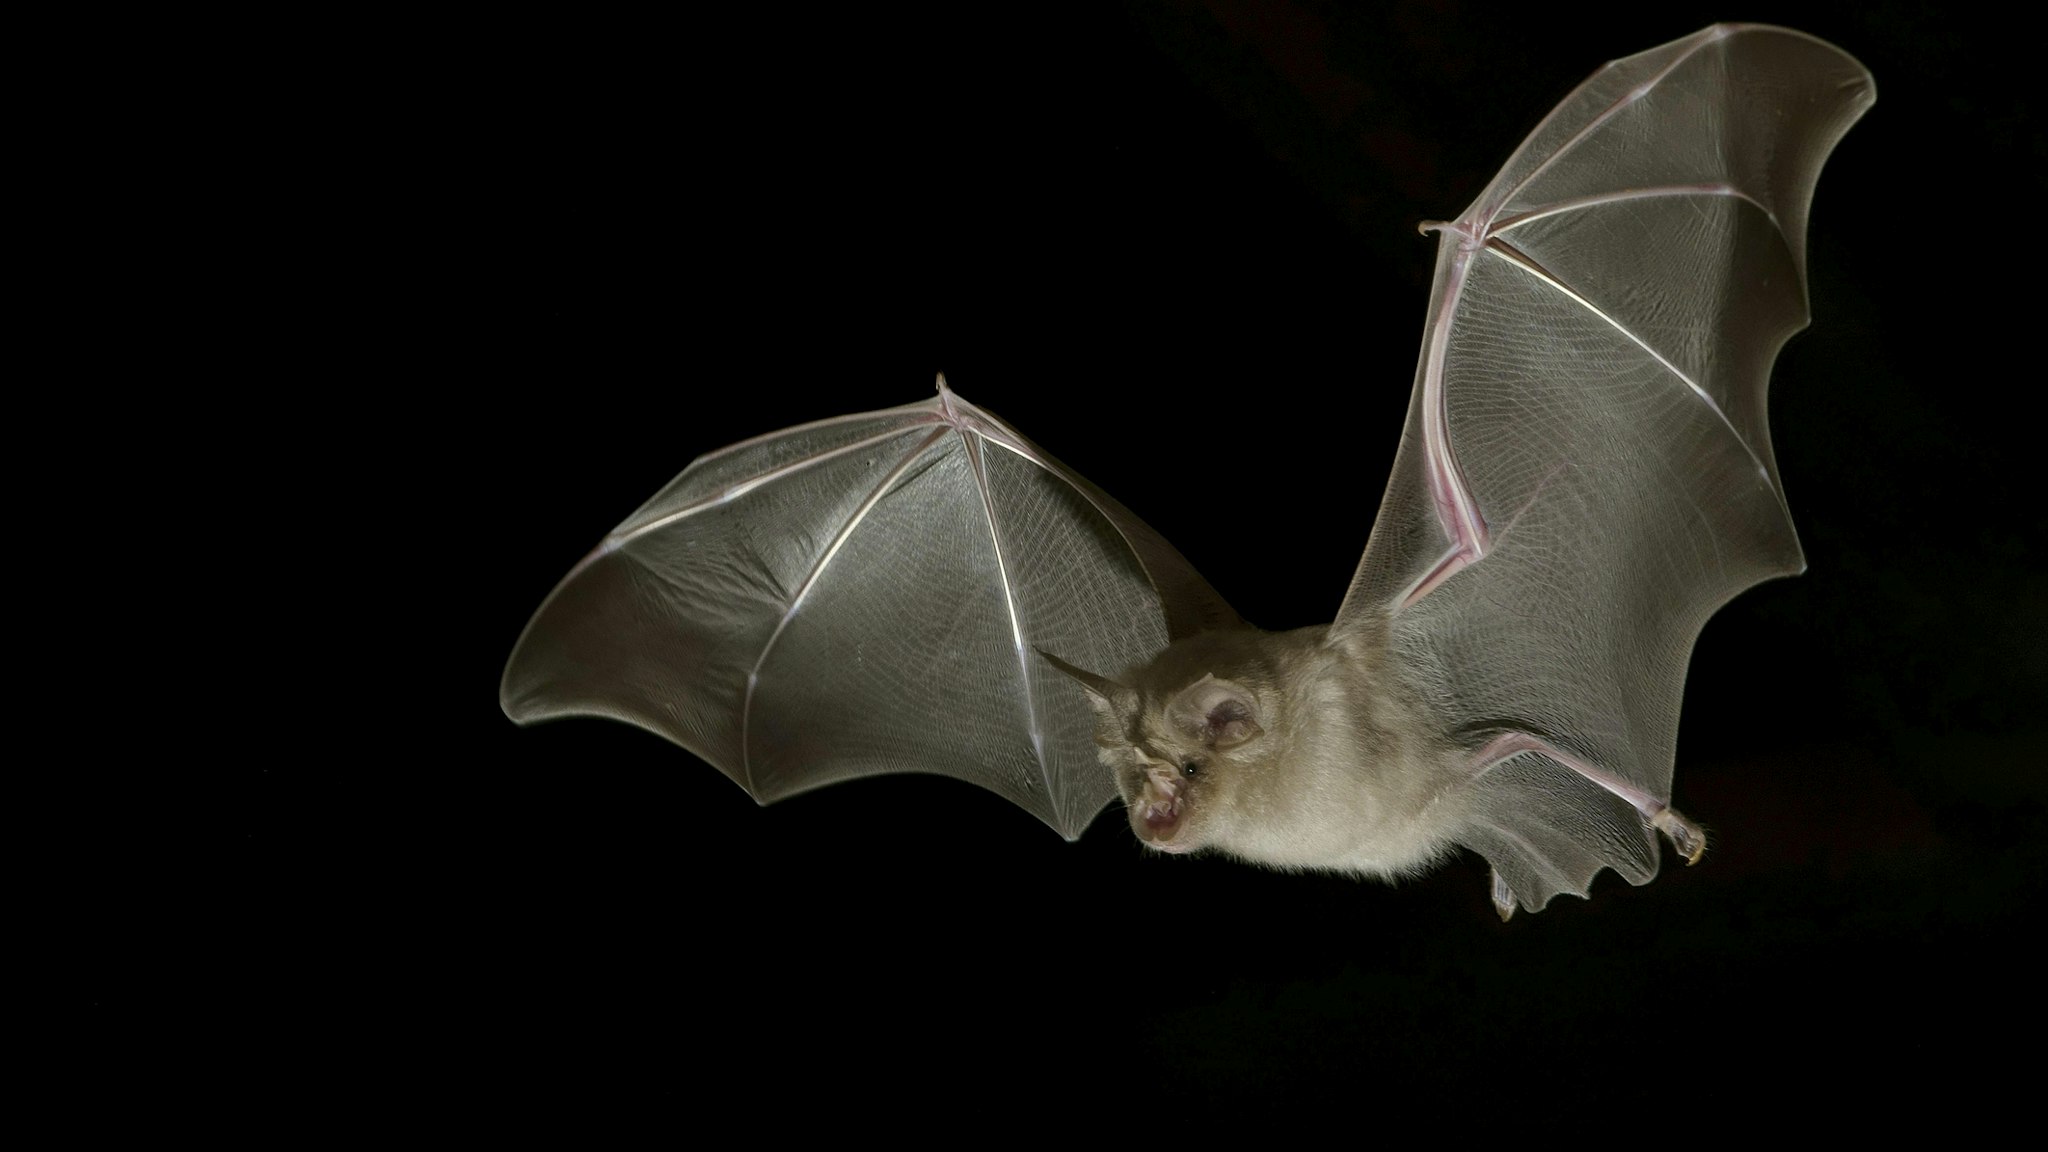 Greater horseshoe bat (Rhinolophus ferrumequinum) in flight at night, Luxembourg